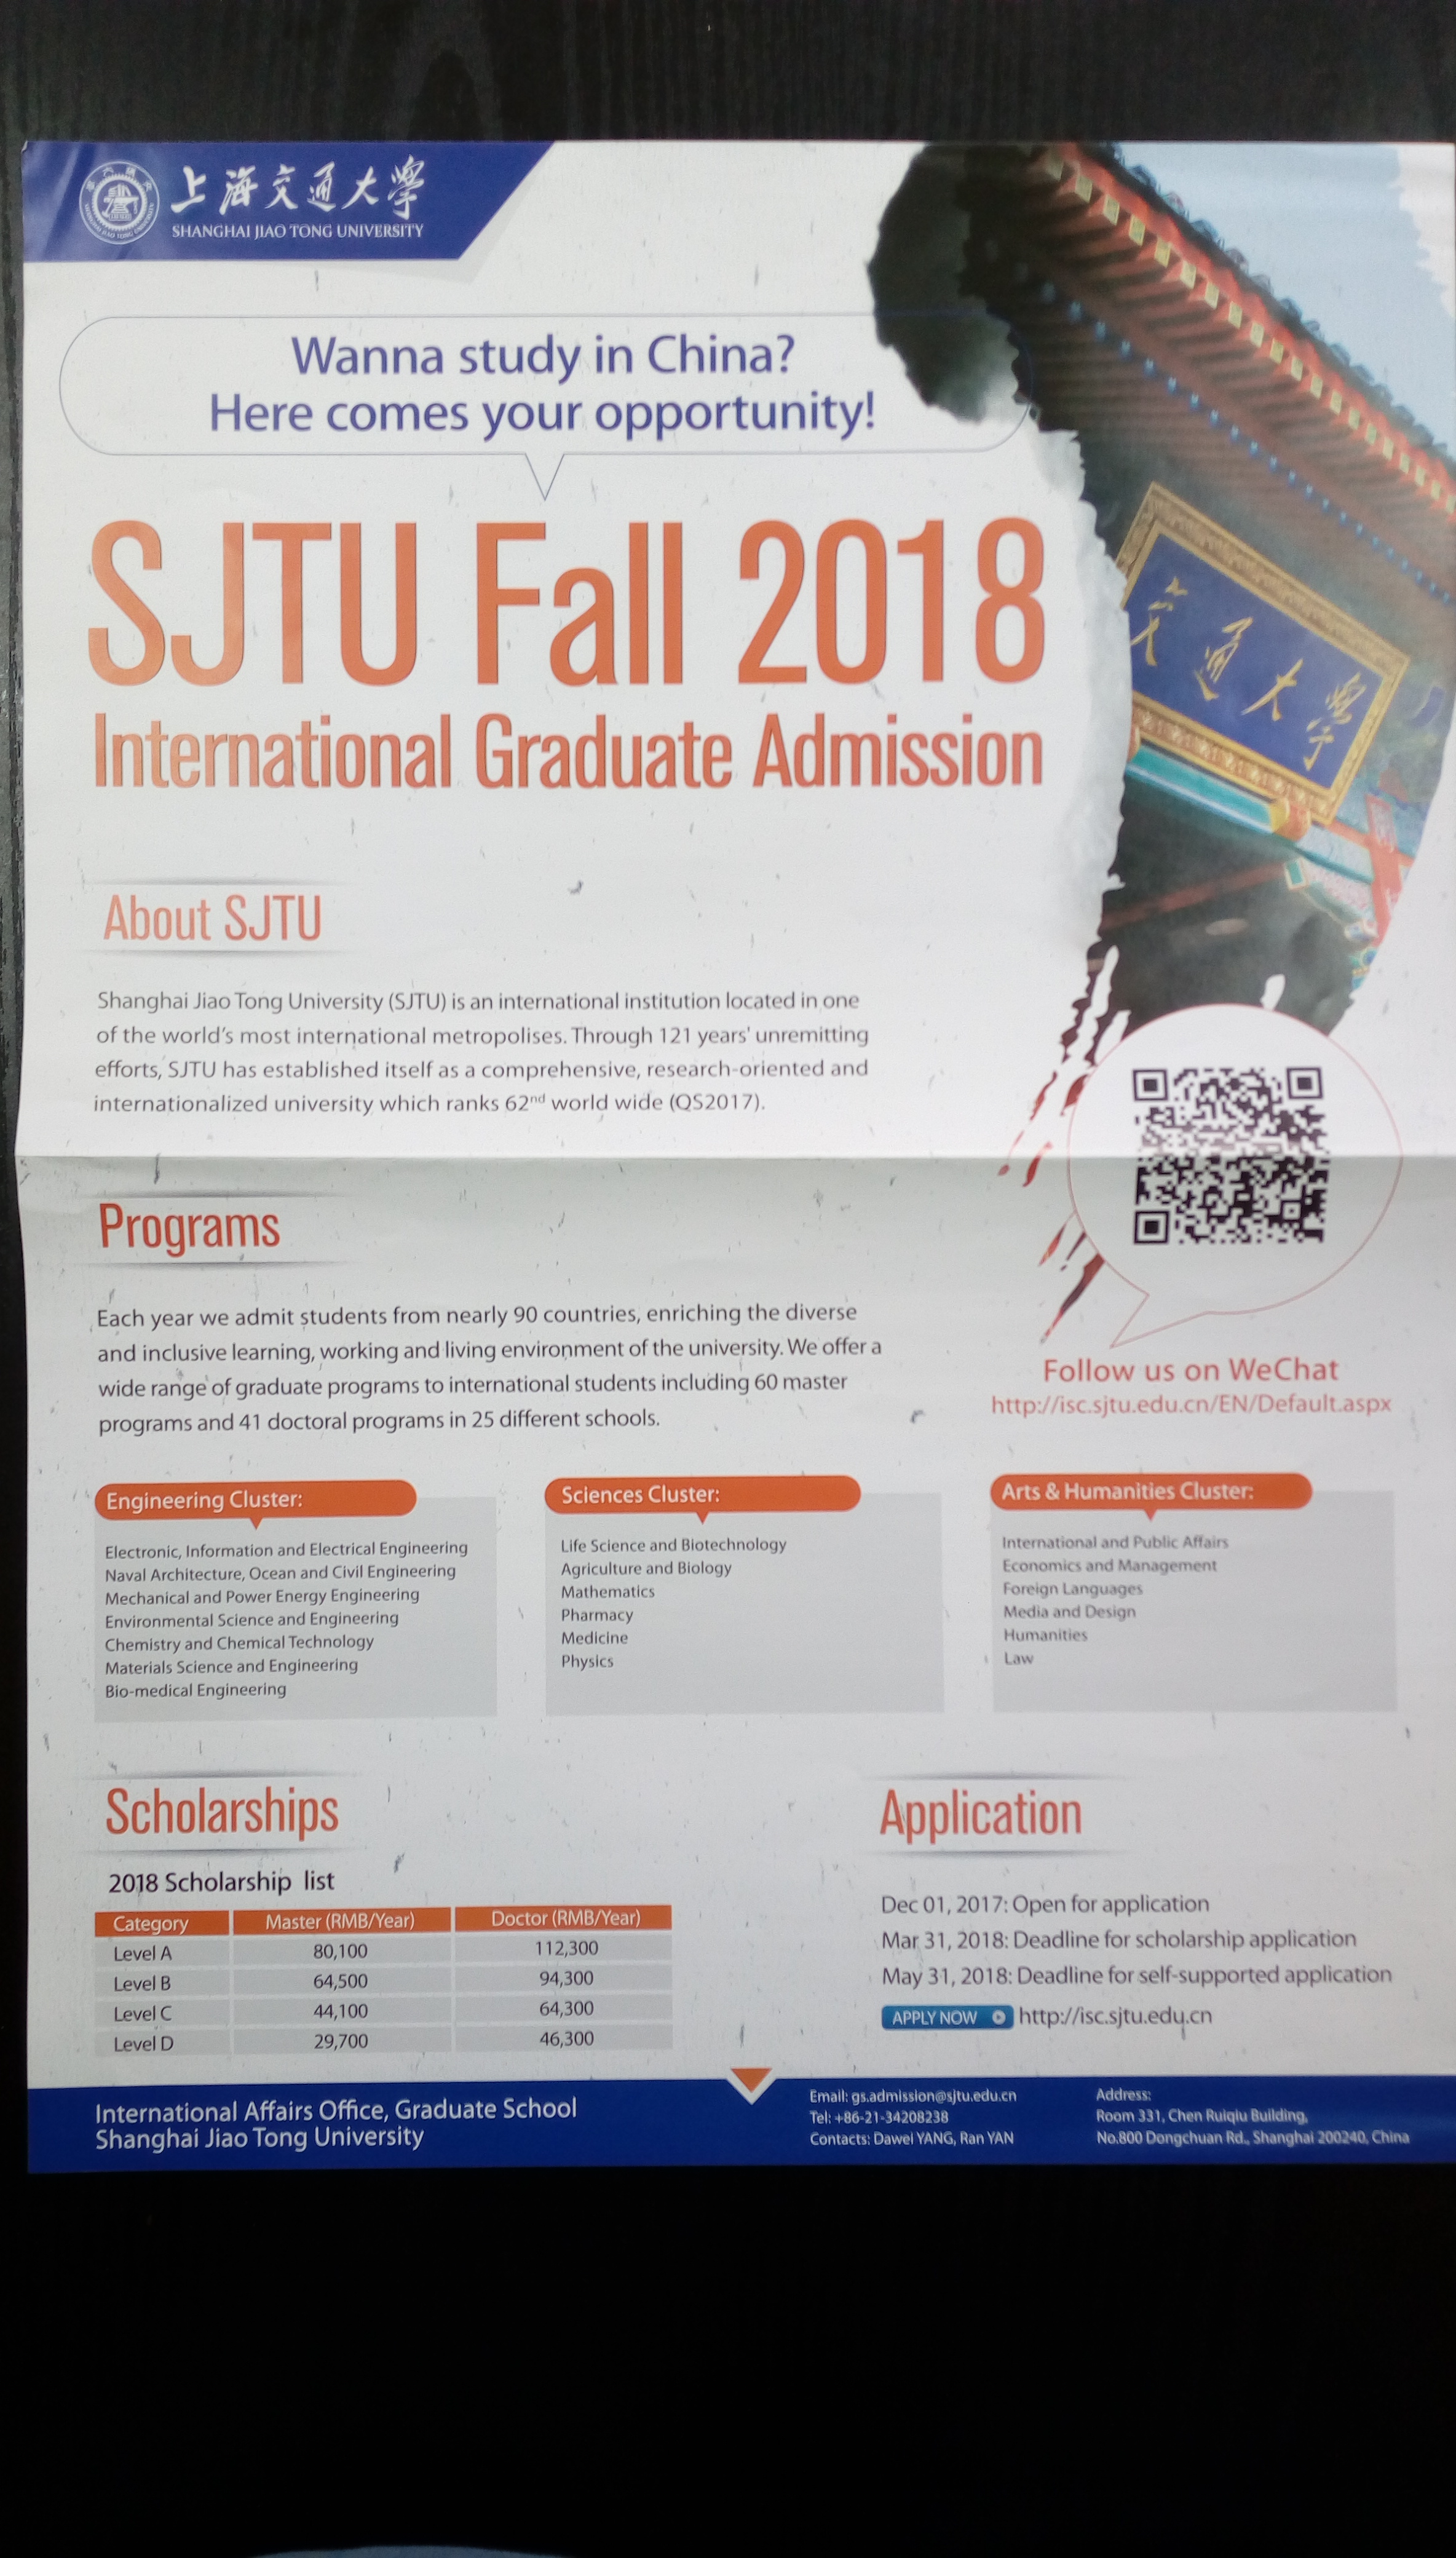 PG Scholarship at SJTU